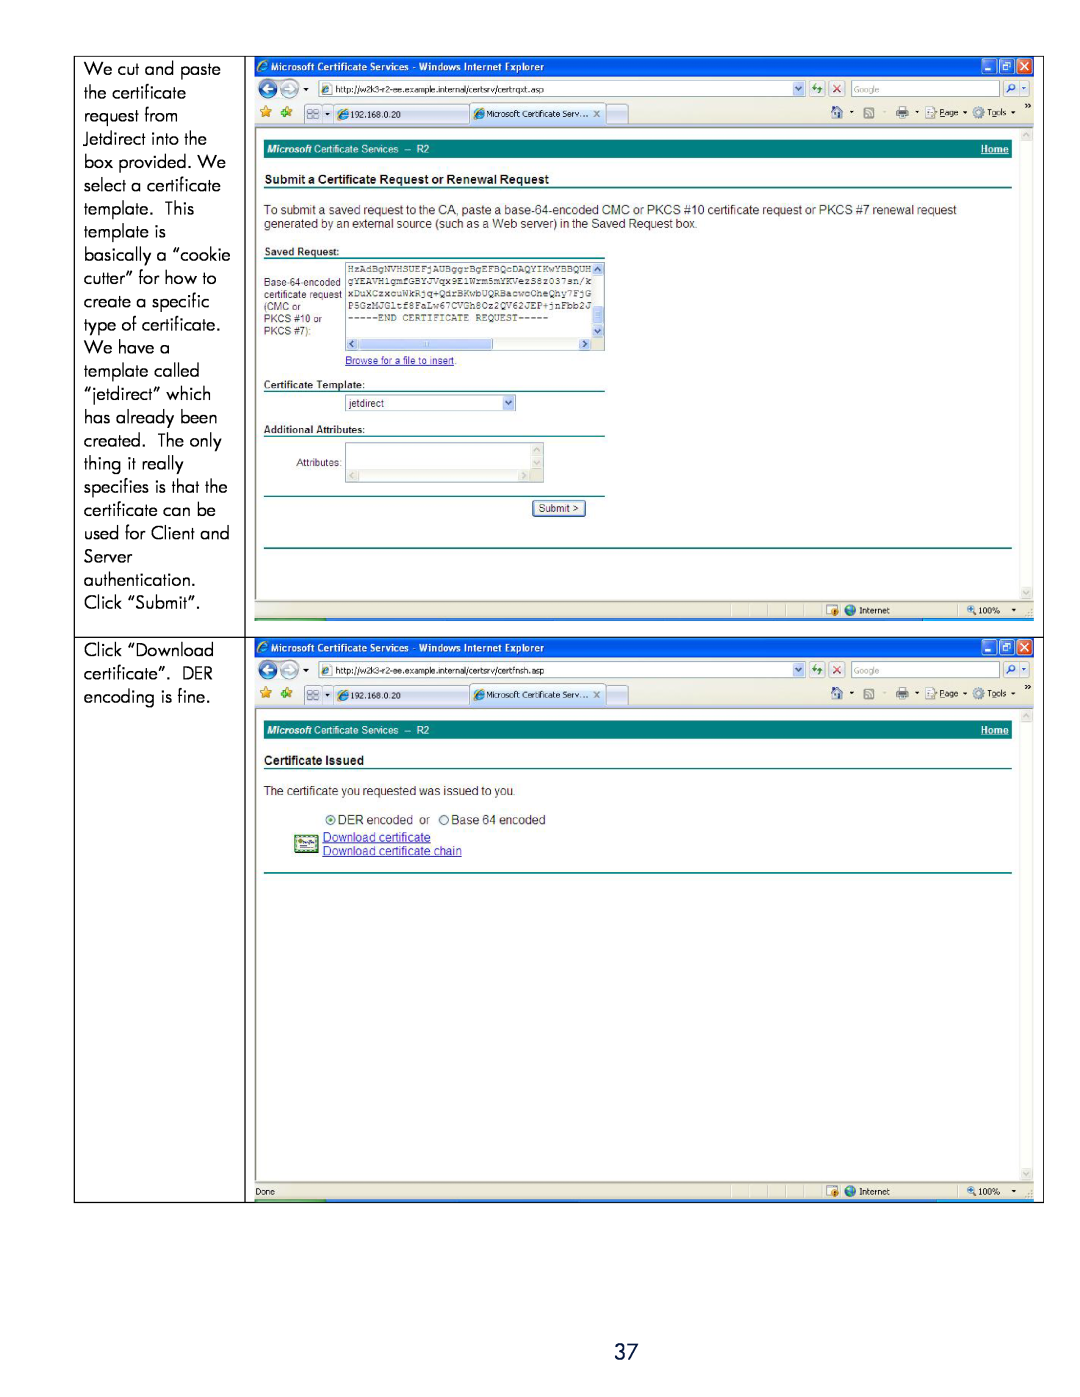 HP 250m Print Server for Fast Ethernet manual Click “Download certificate”. DER encoding is fine 